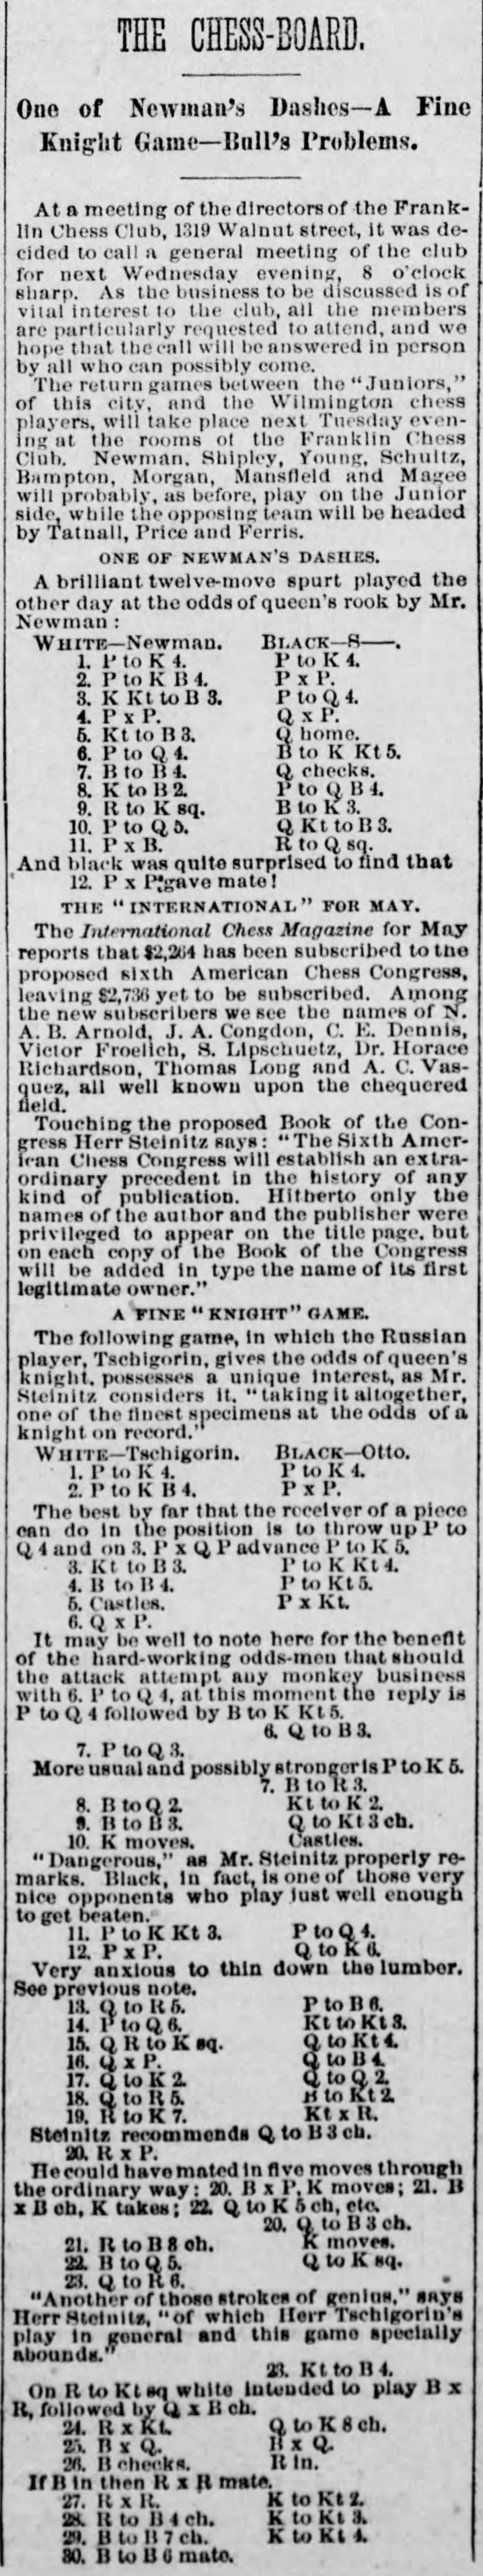 1887.05.15-01 Philadelphia Times.png